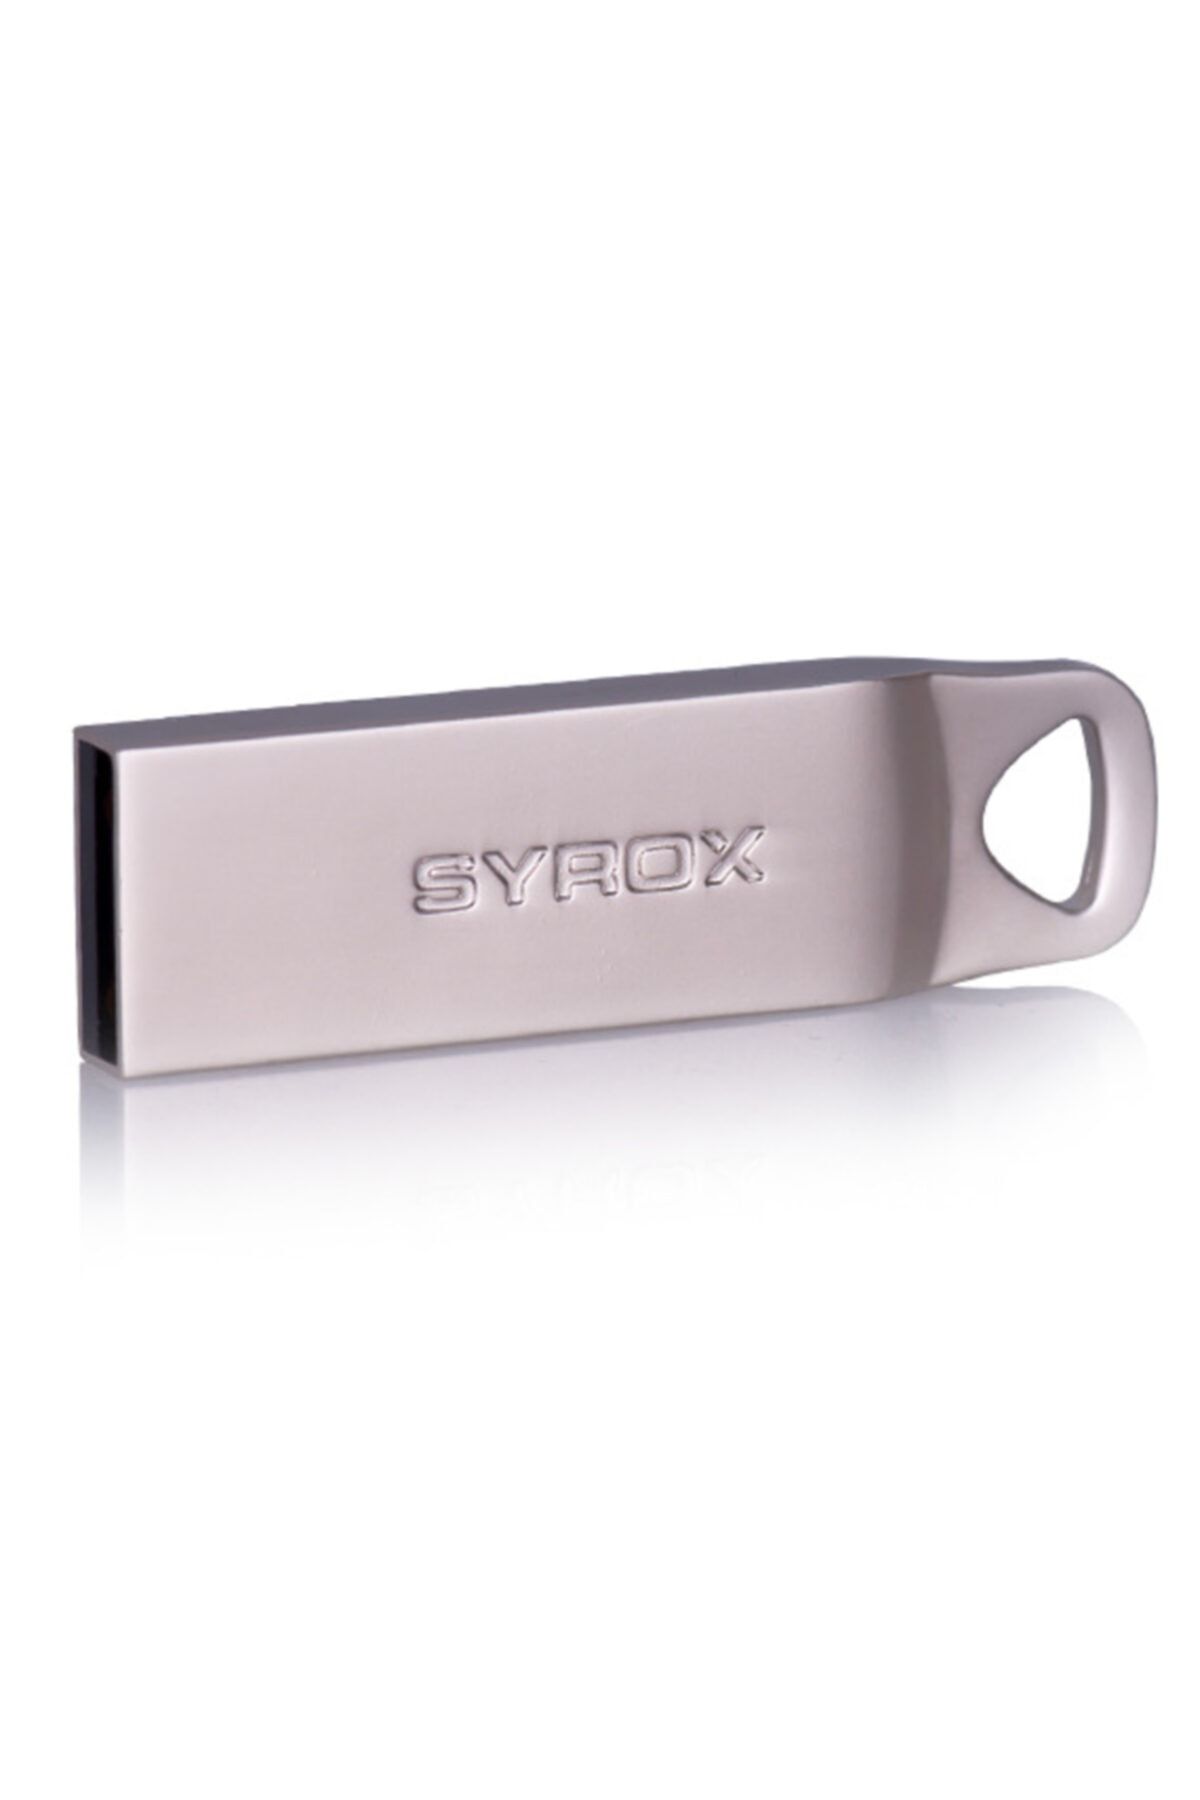 Syrox 8 Gb Metal Usb Flash Bellek